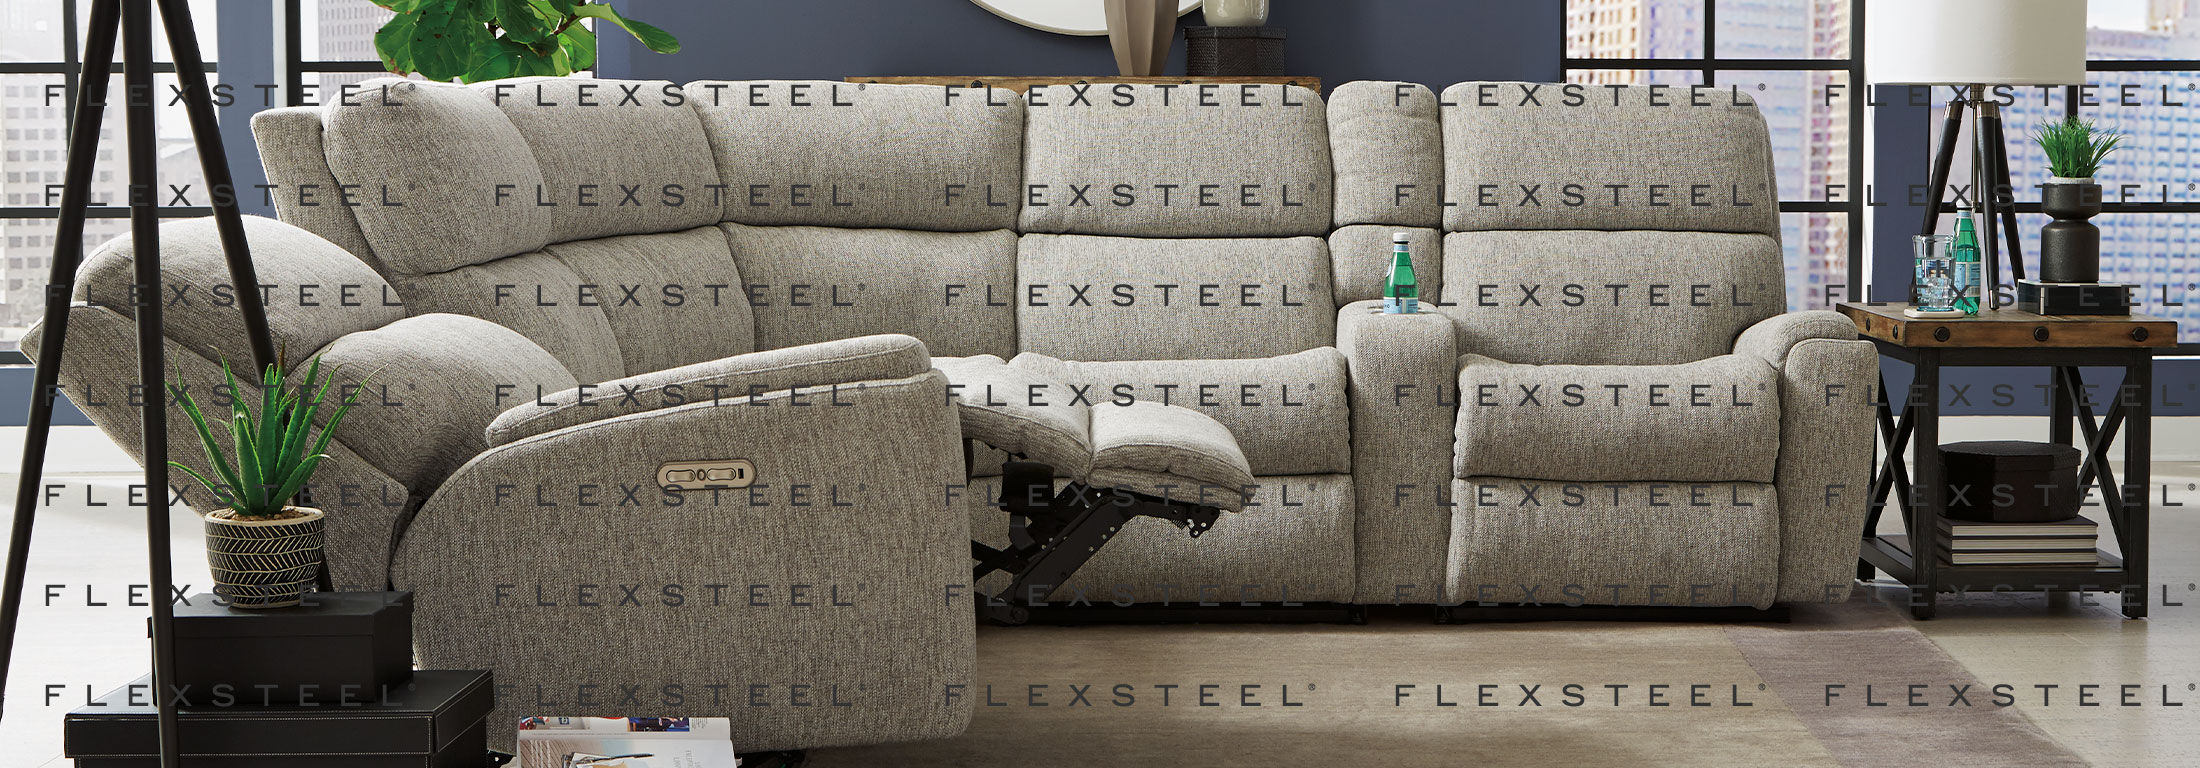 Flexsteel Furniture Nationwide